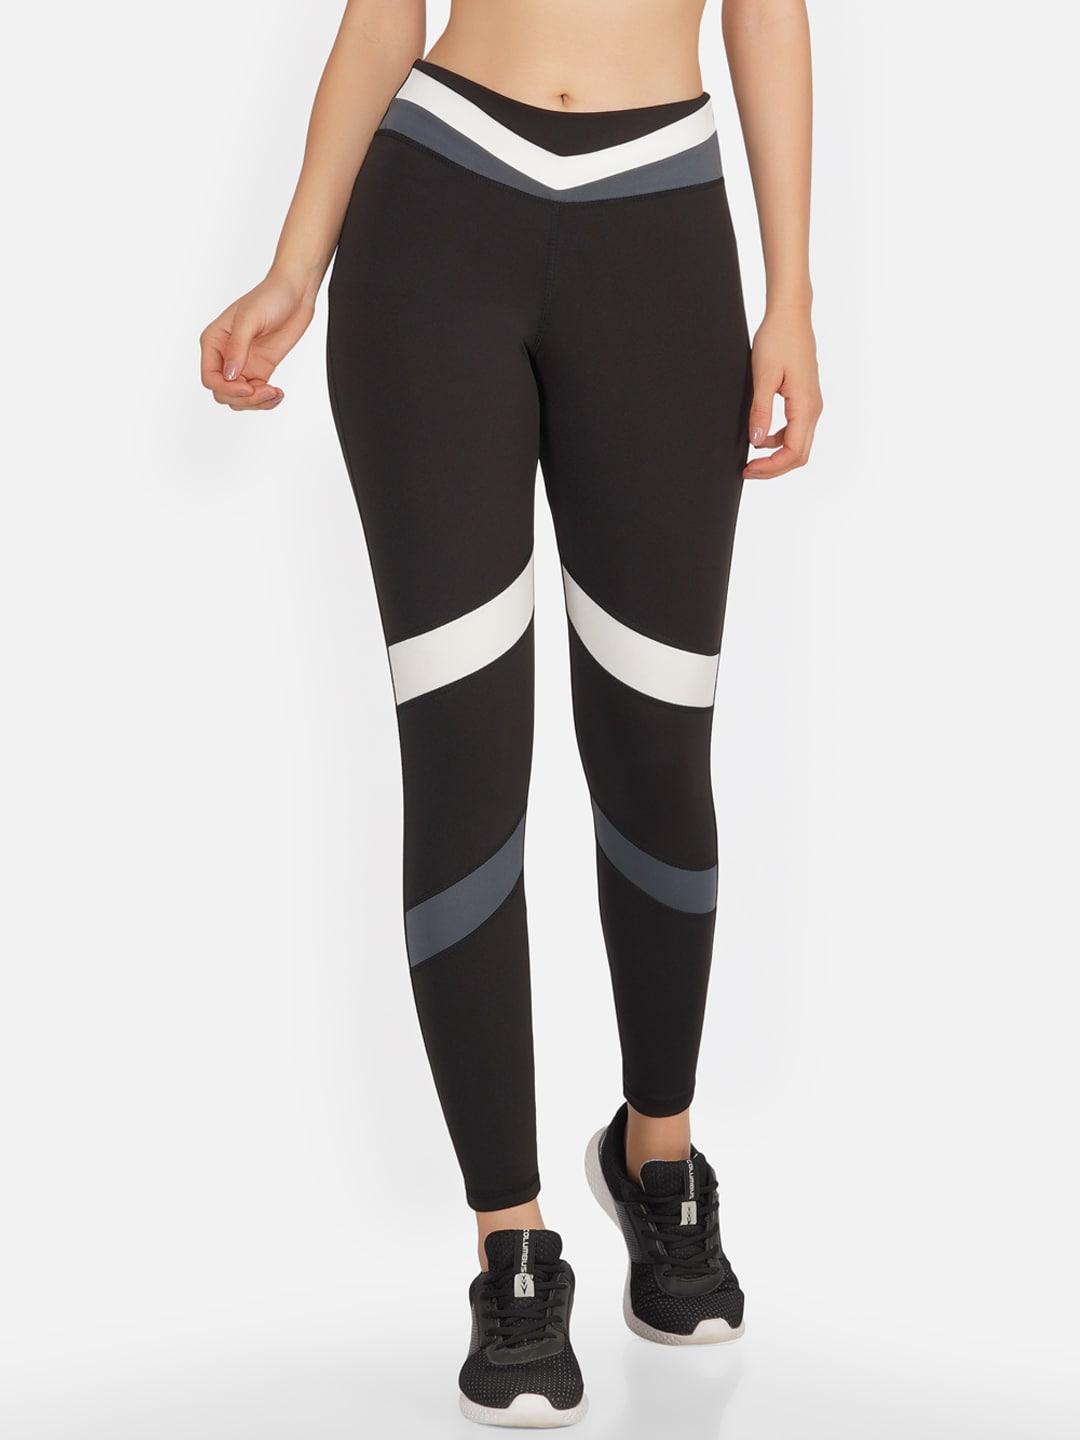 neu-look-fashion-women-black-&-grey-colourblocked-gym-tights